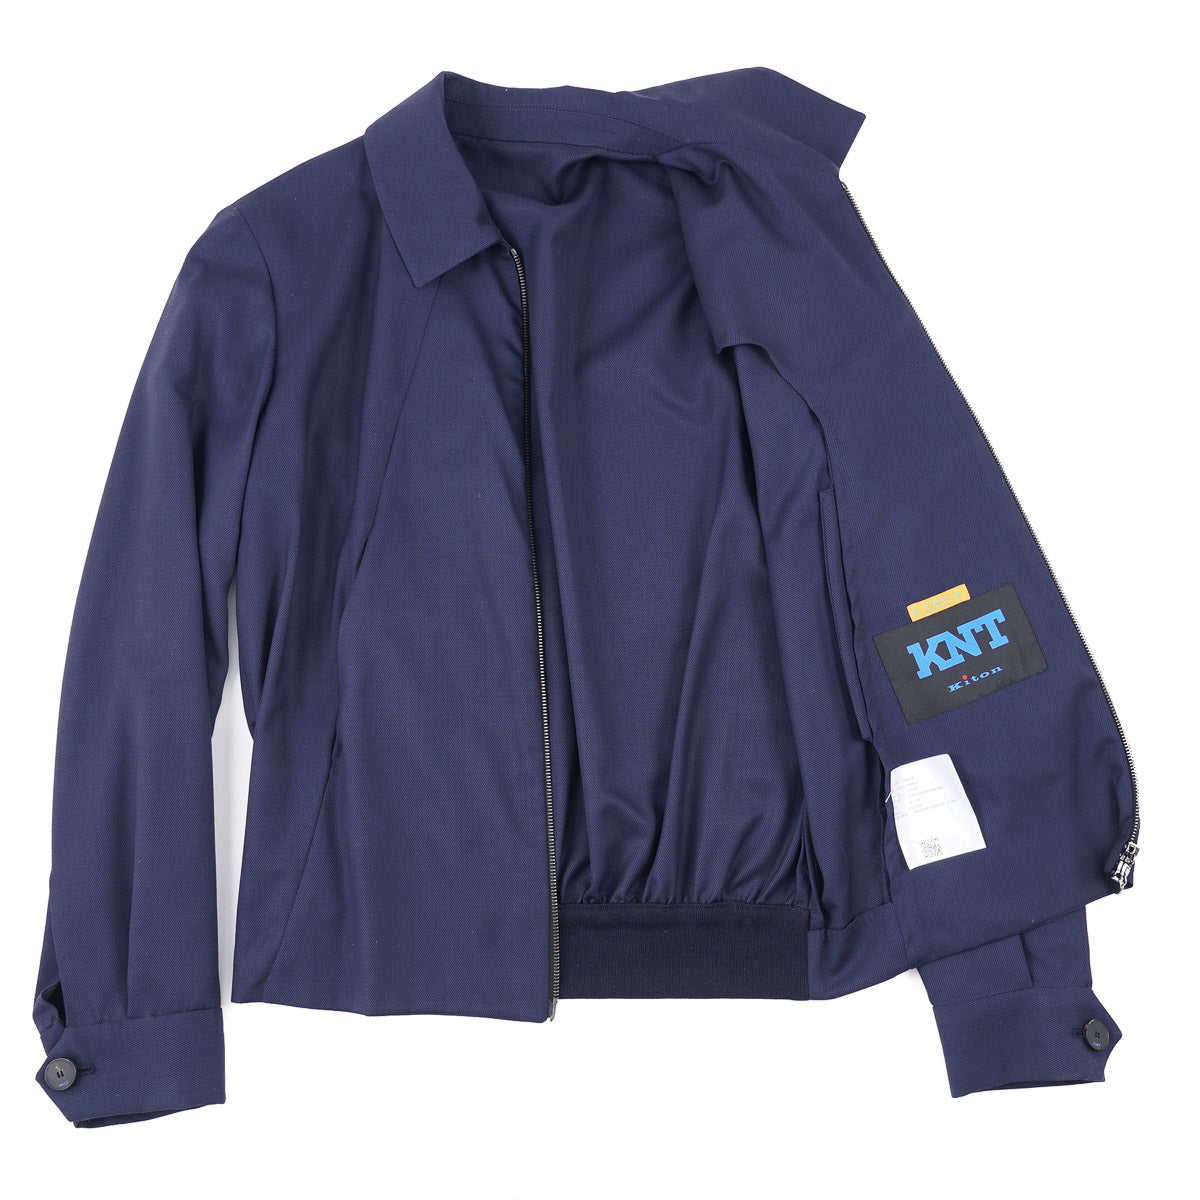 Kiton KNT 14 Micron Wool Jacket - Top Shelf Apparel